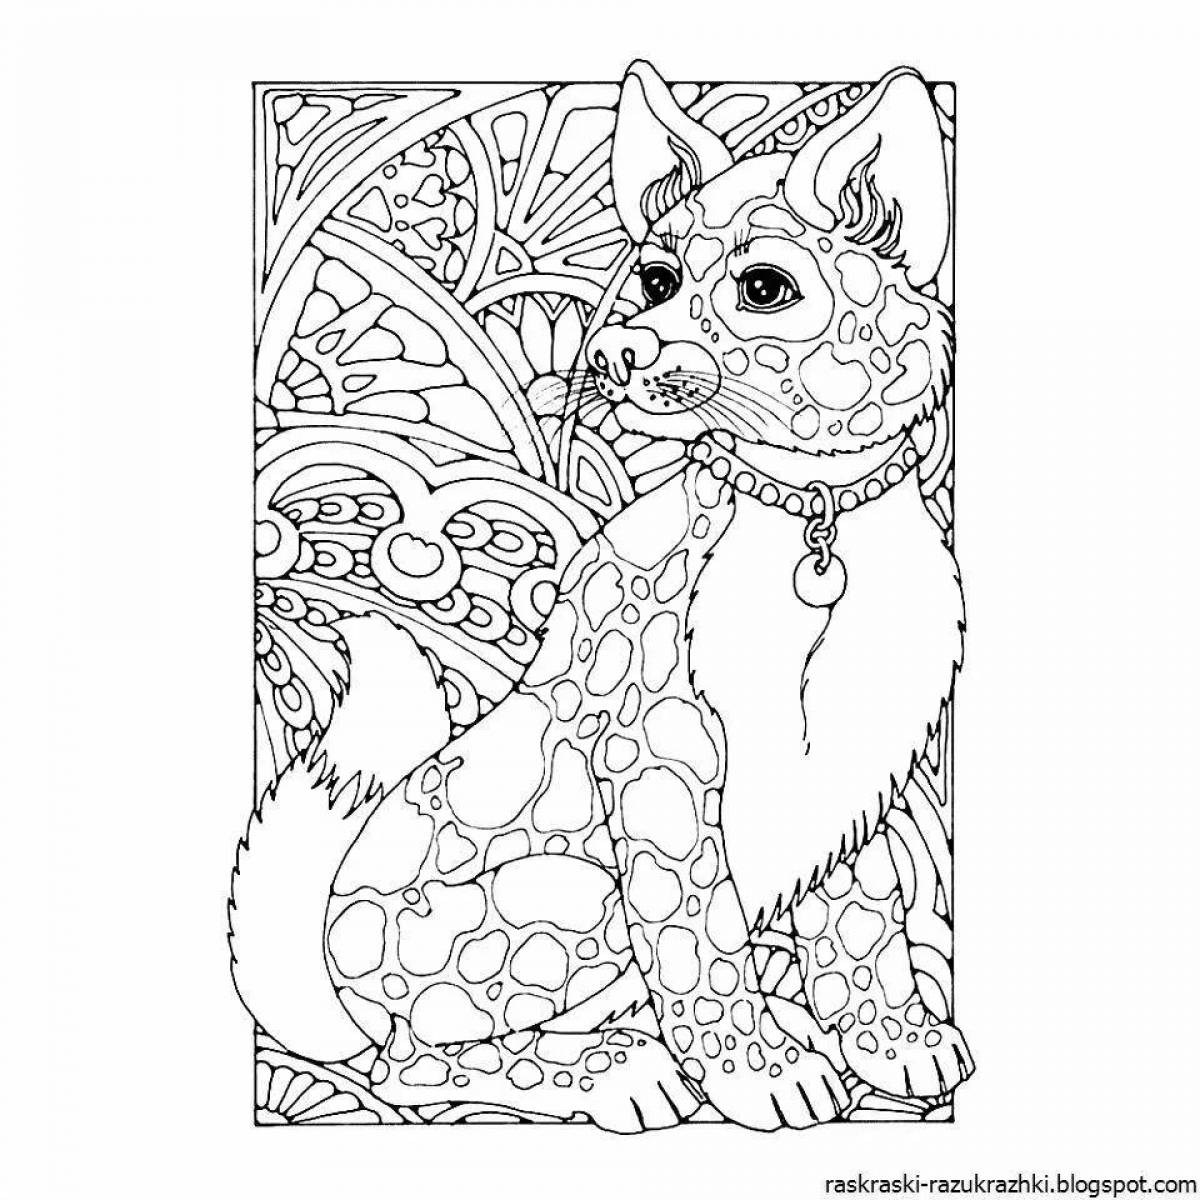 Wonderful animal coloring book for girls